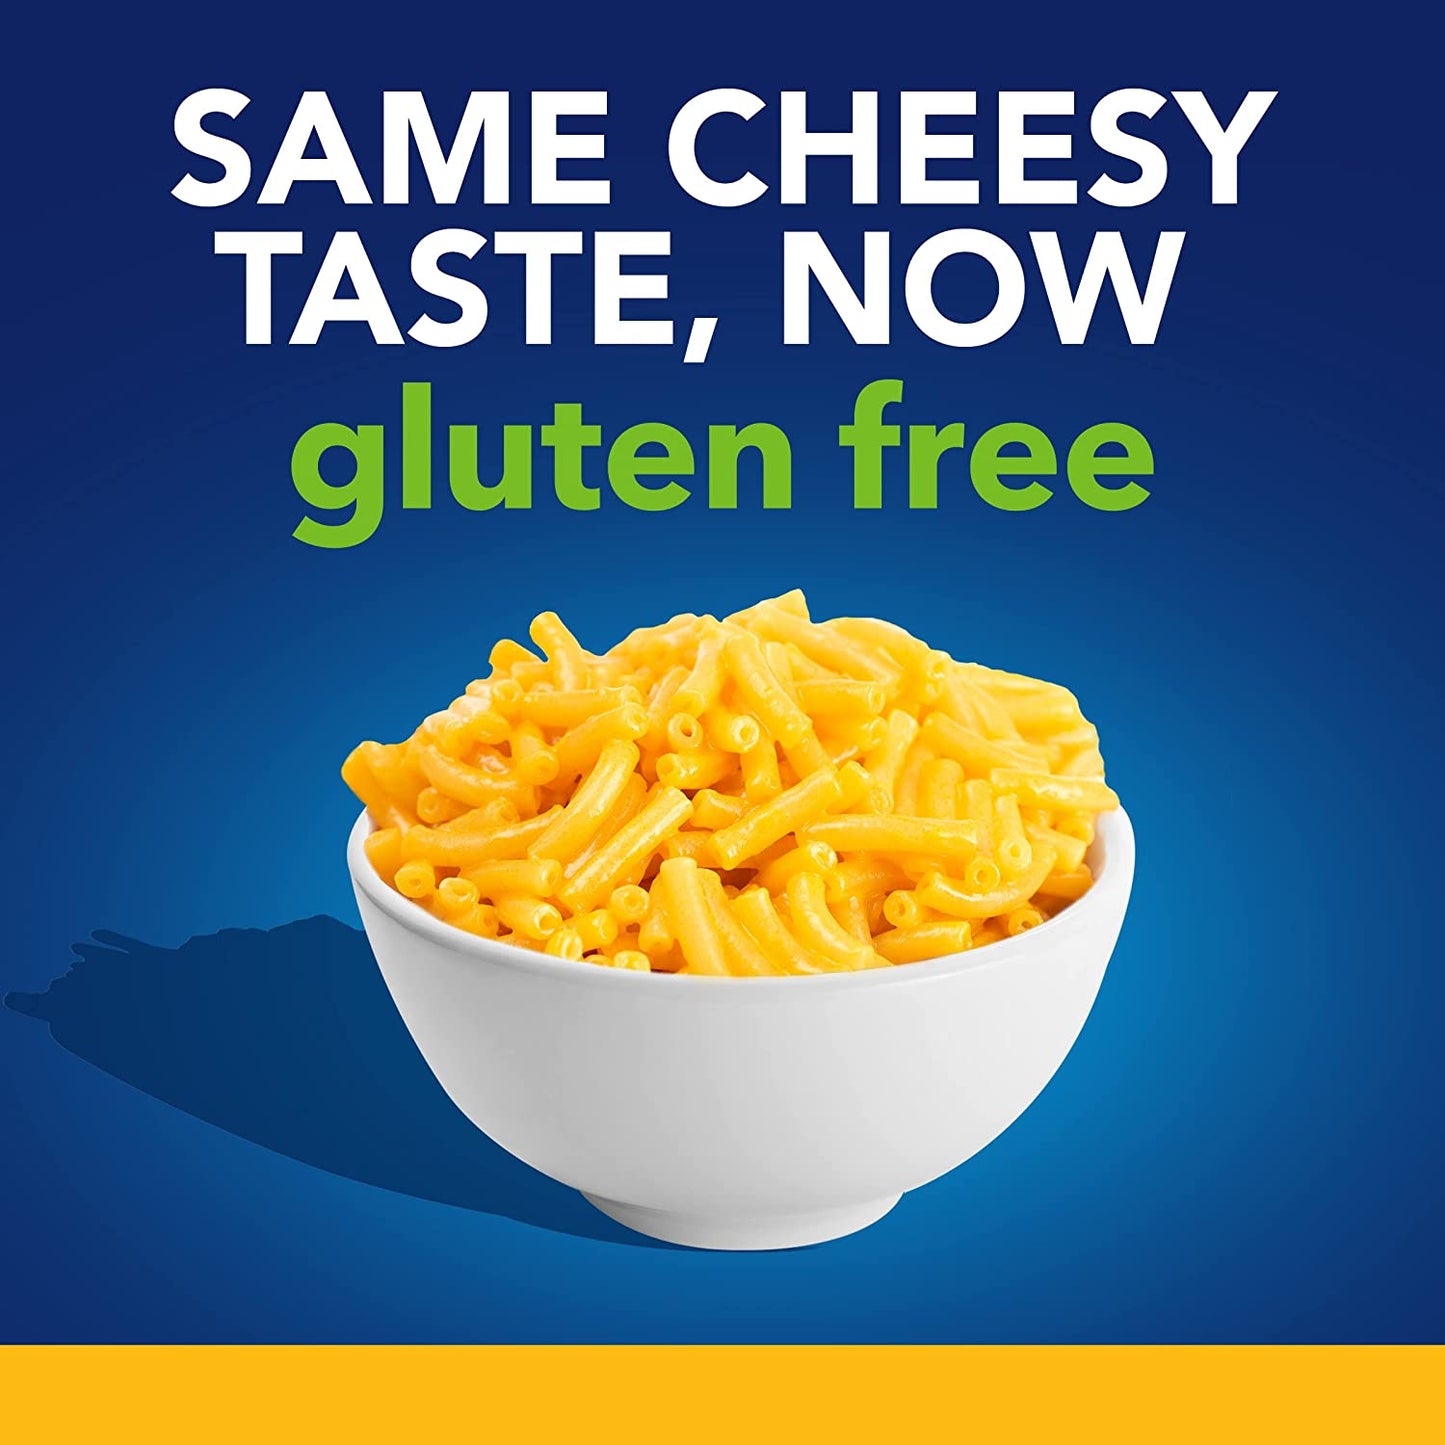 KD Kraft Gluten Free Original Macaroni and Cheese , Wholesale Imported - TAX FREE - RARE